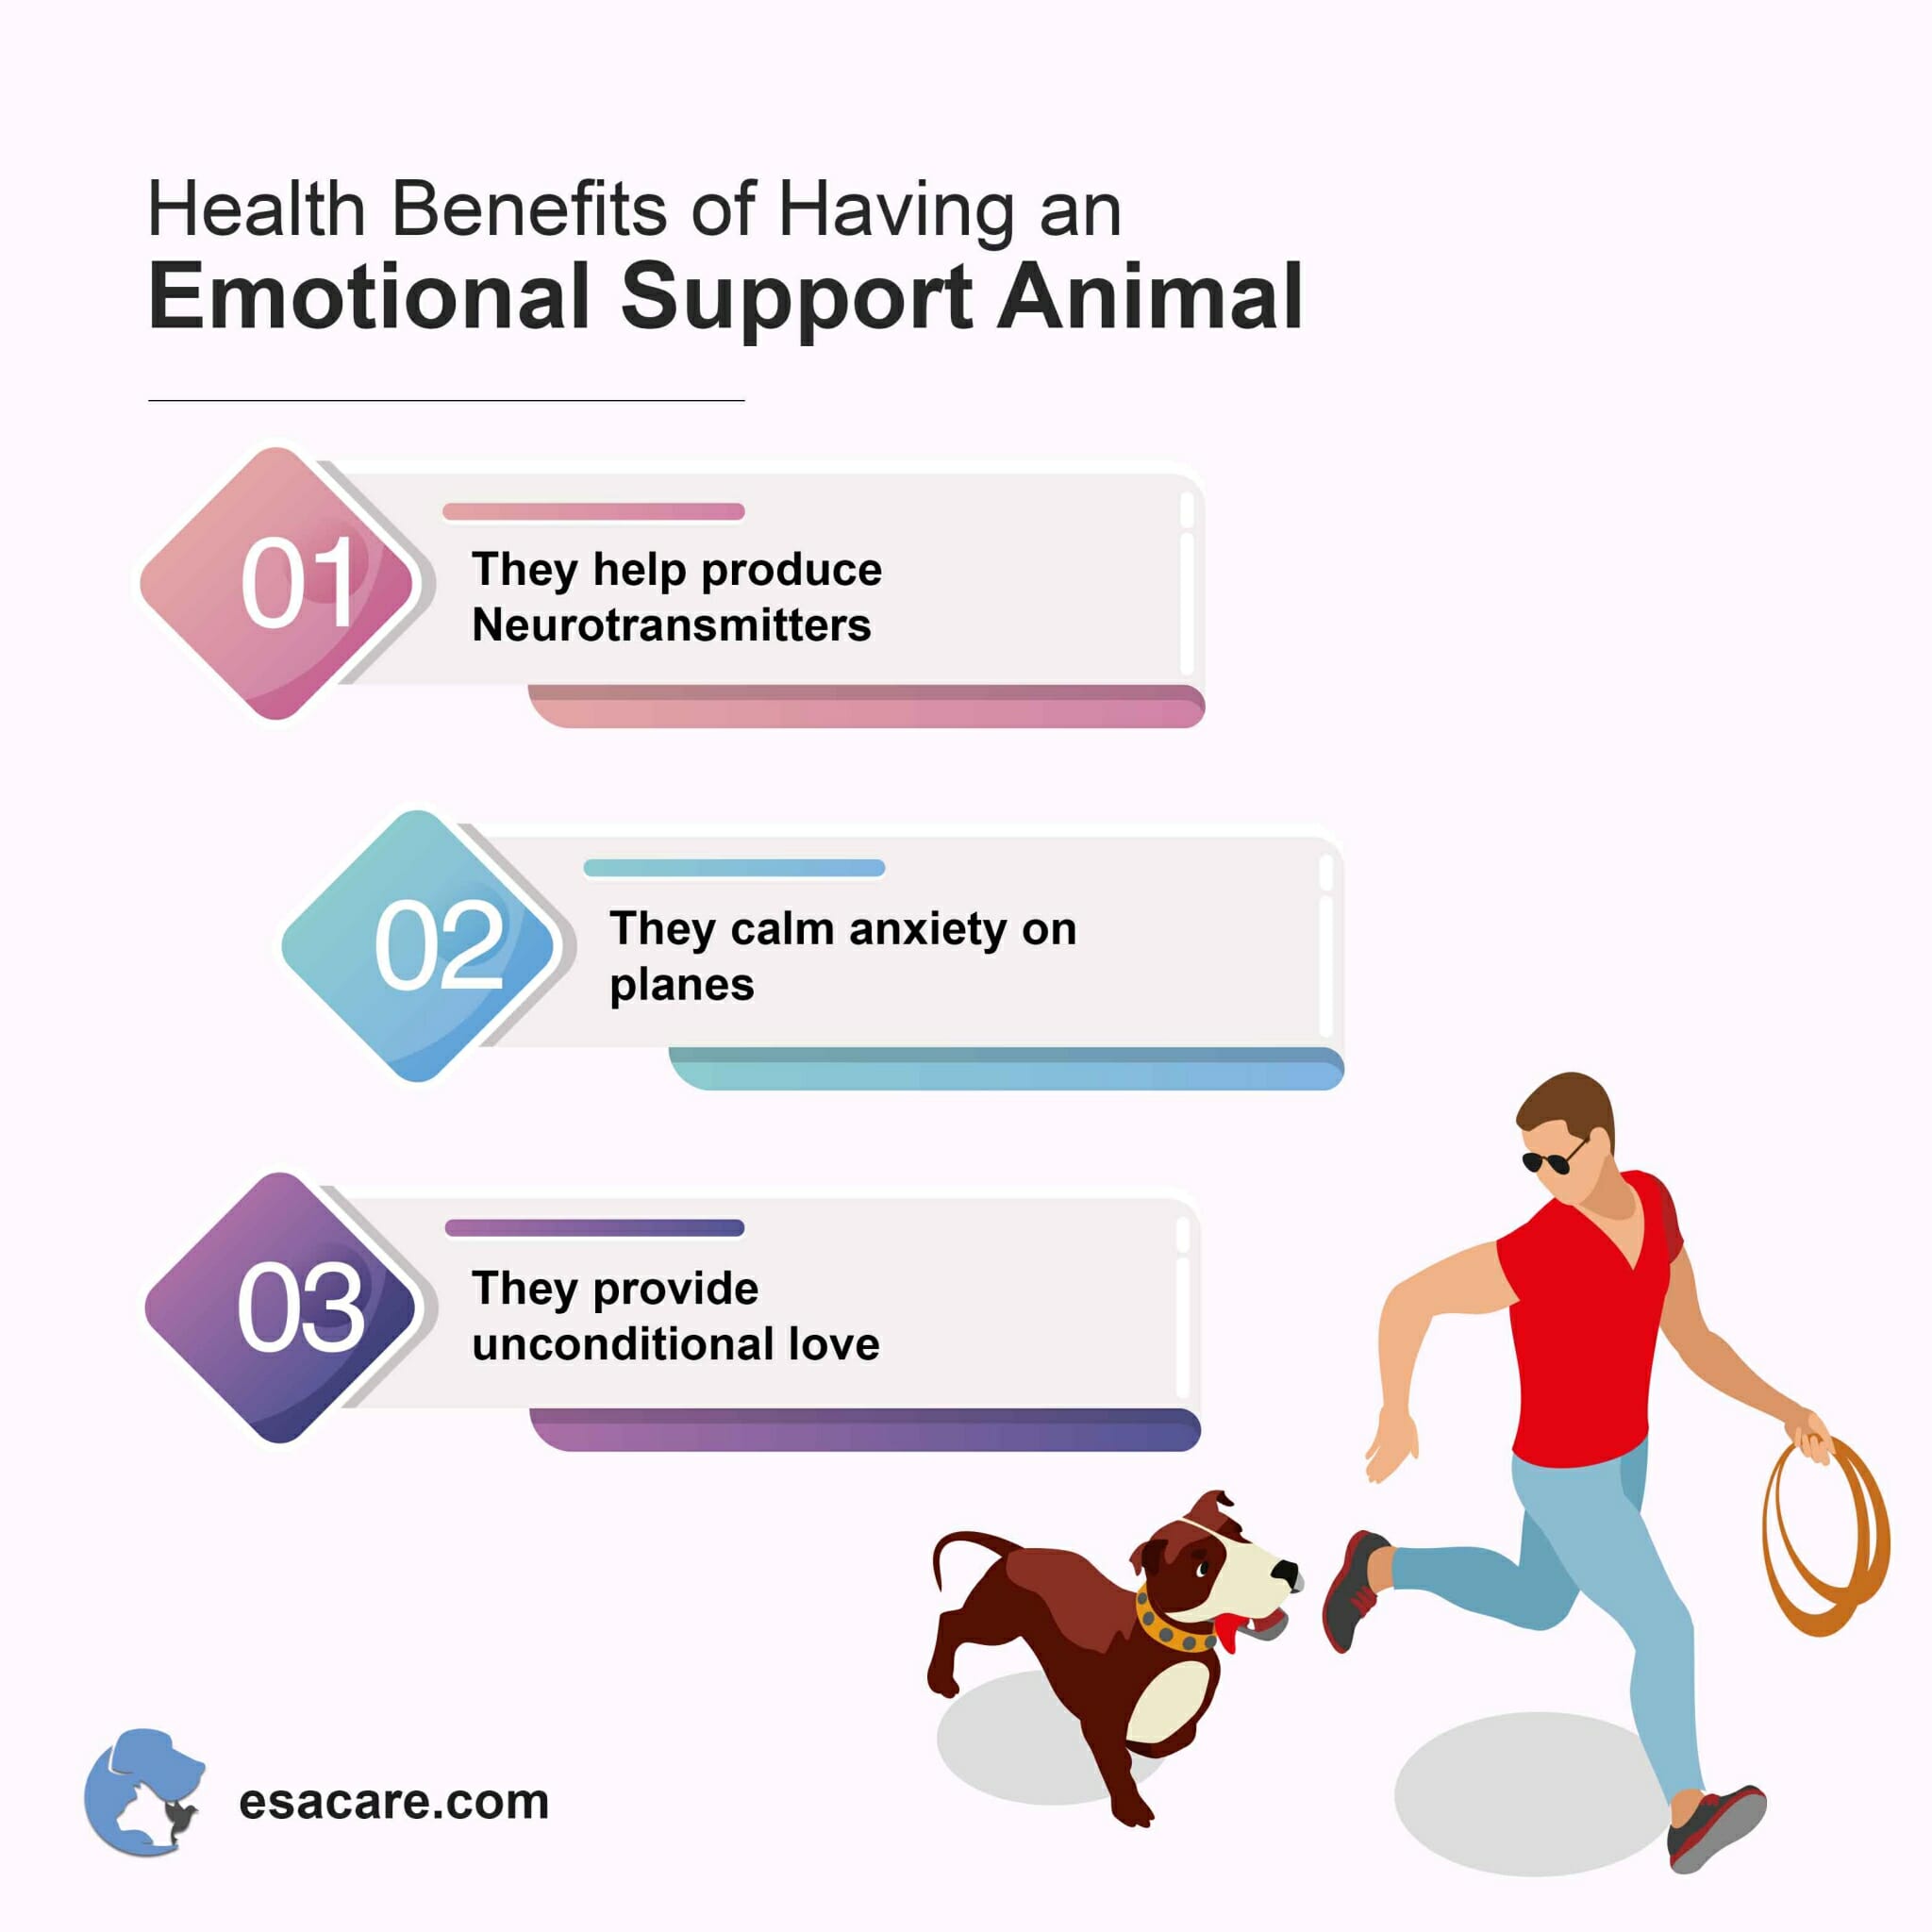 Emotional support animal benefits